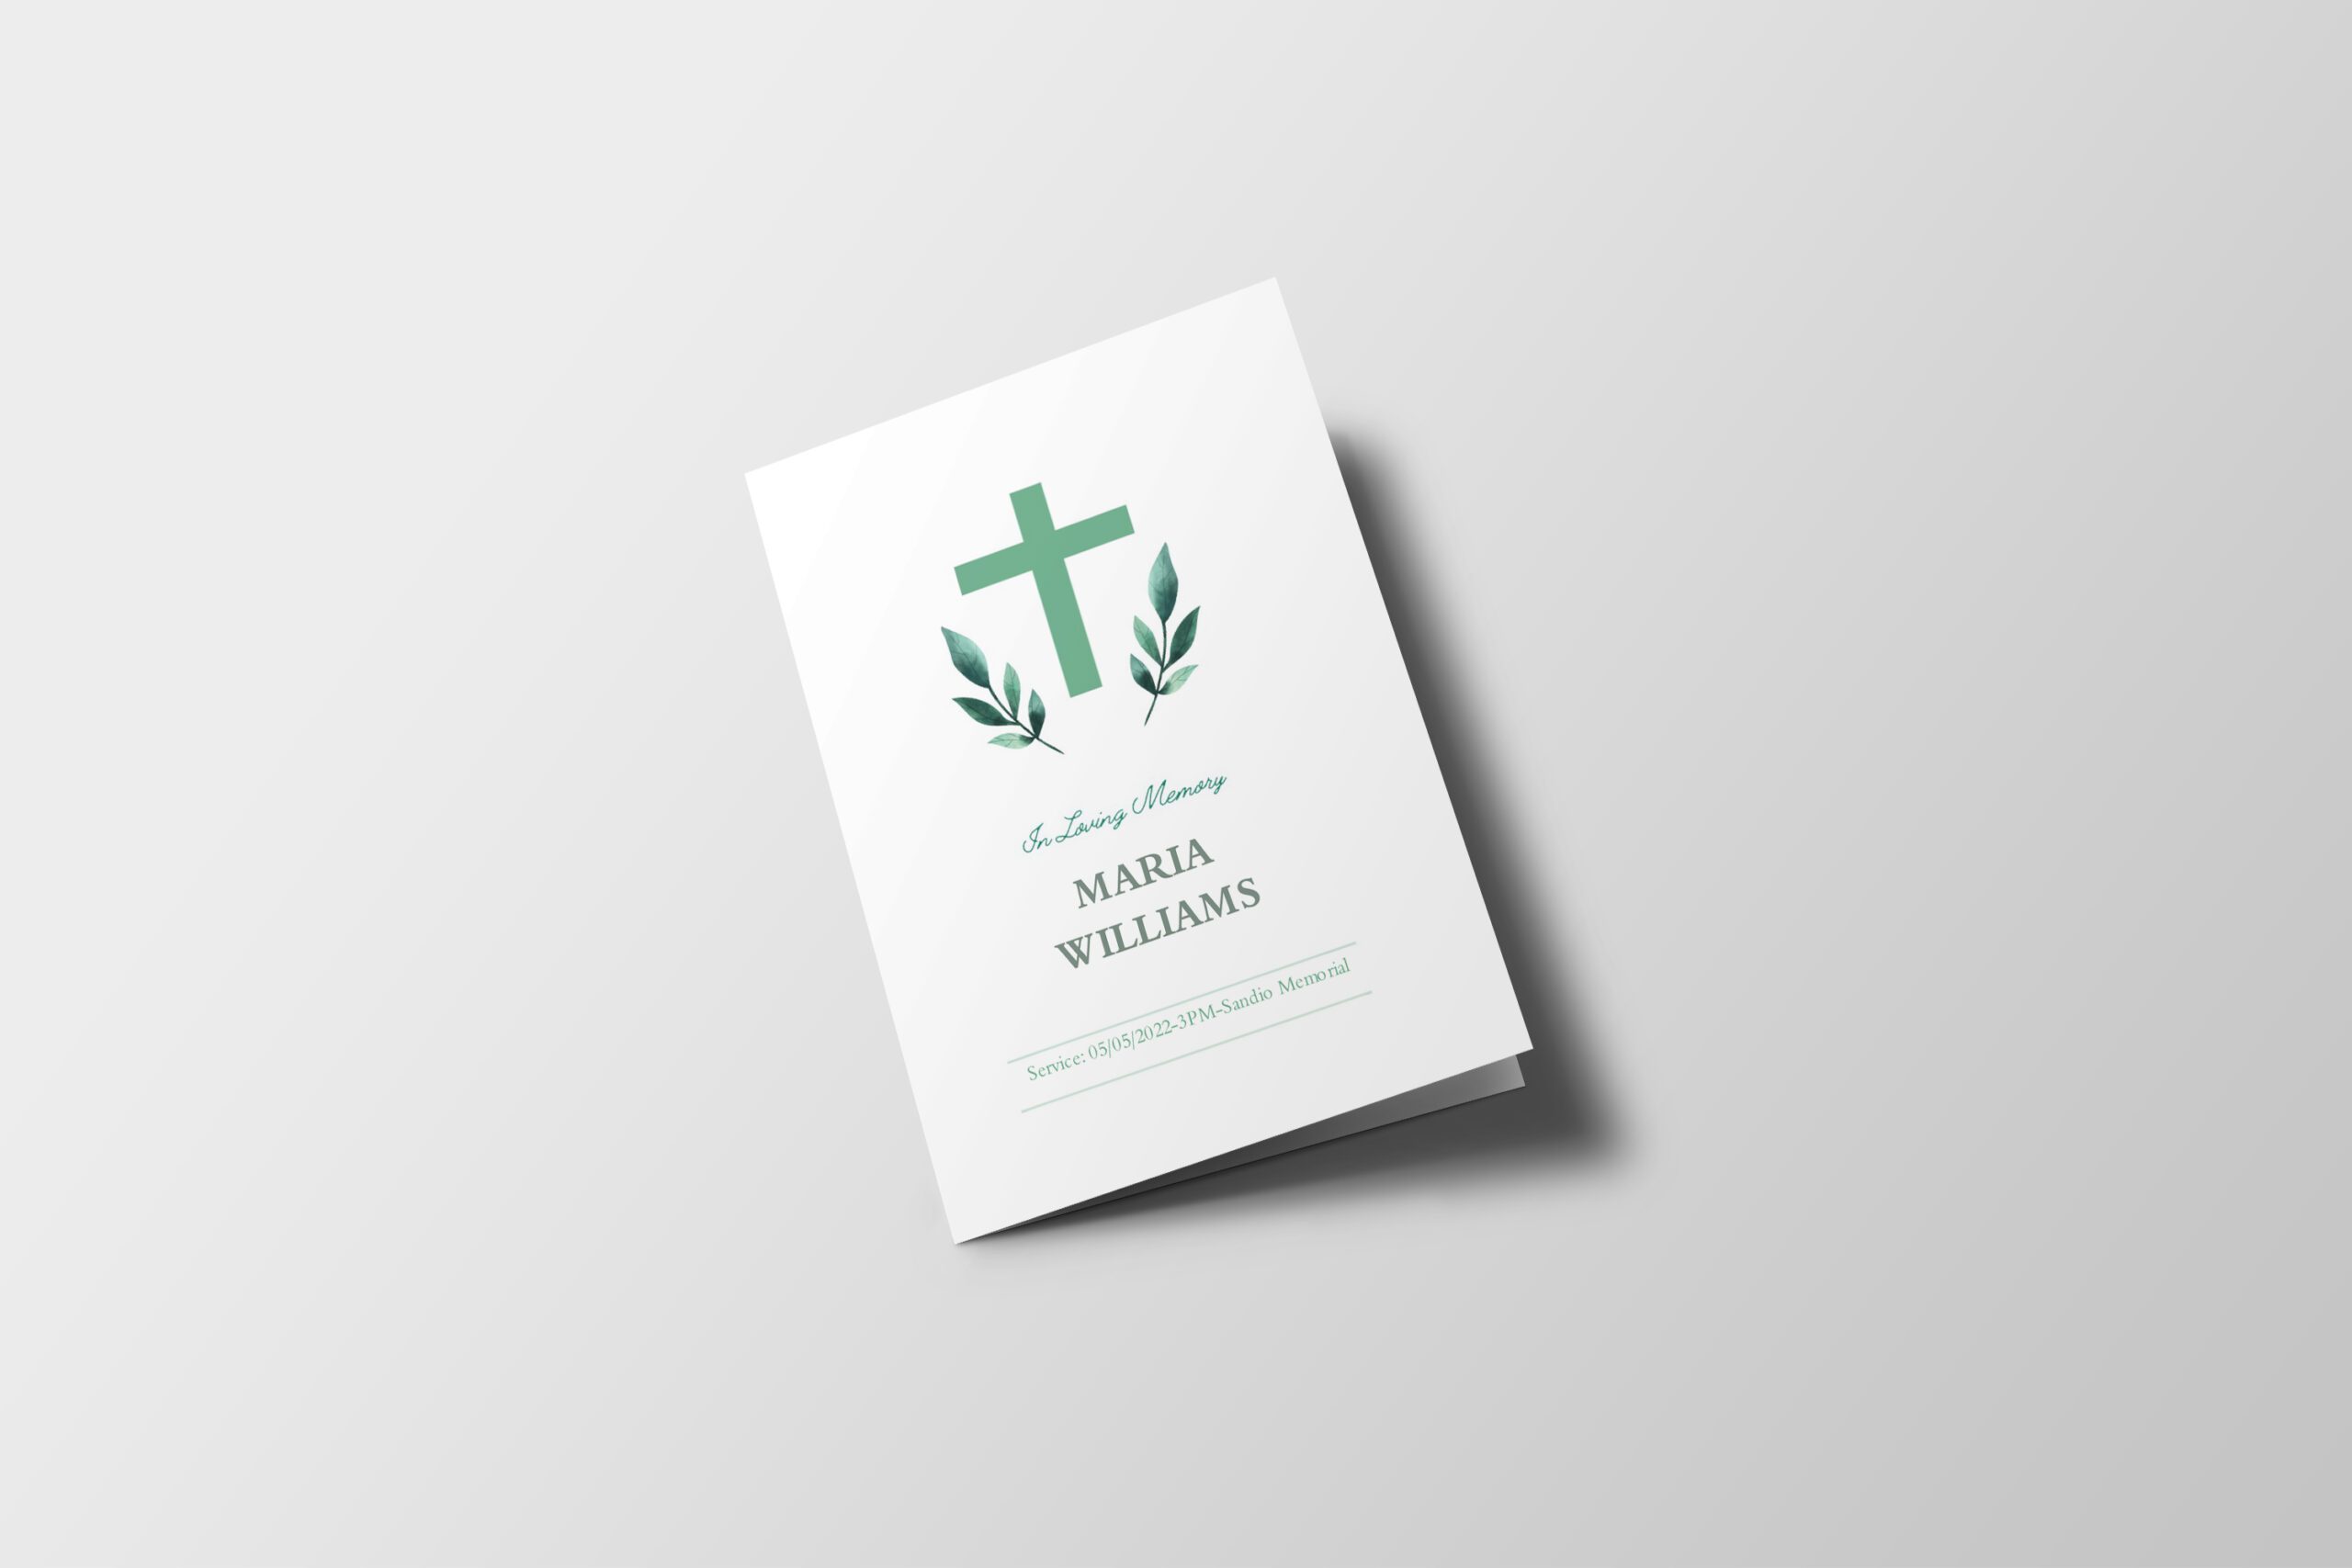 Green Cross Half Page Funeral Program Template